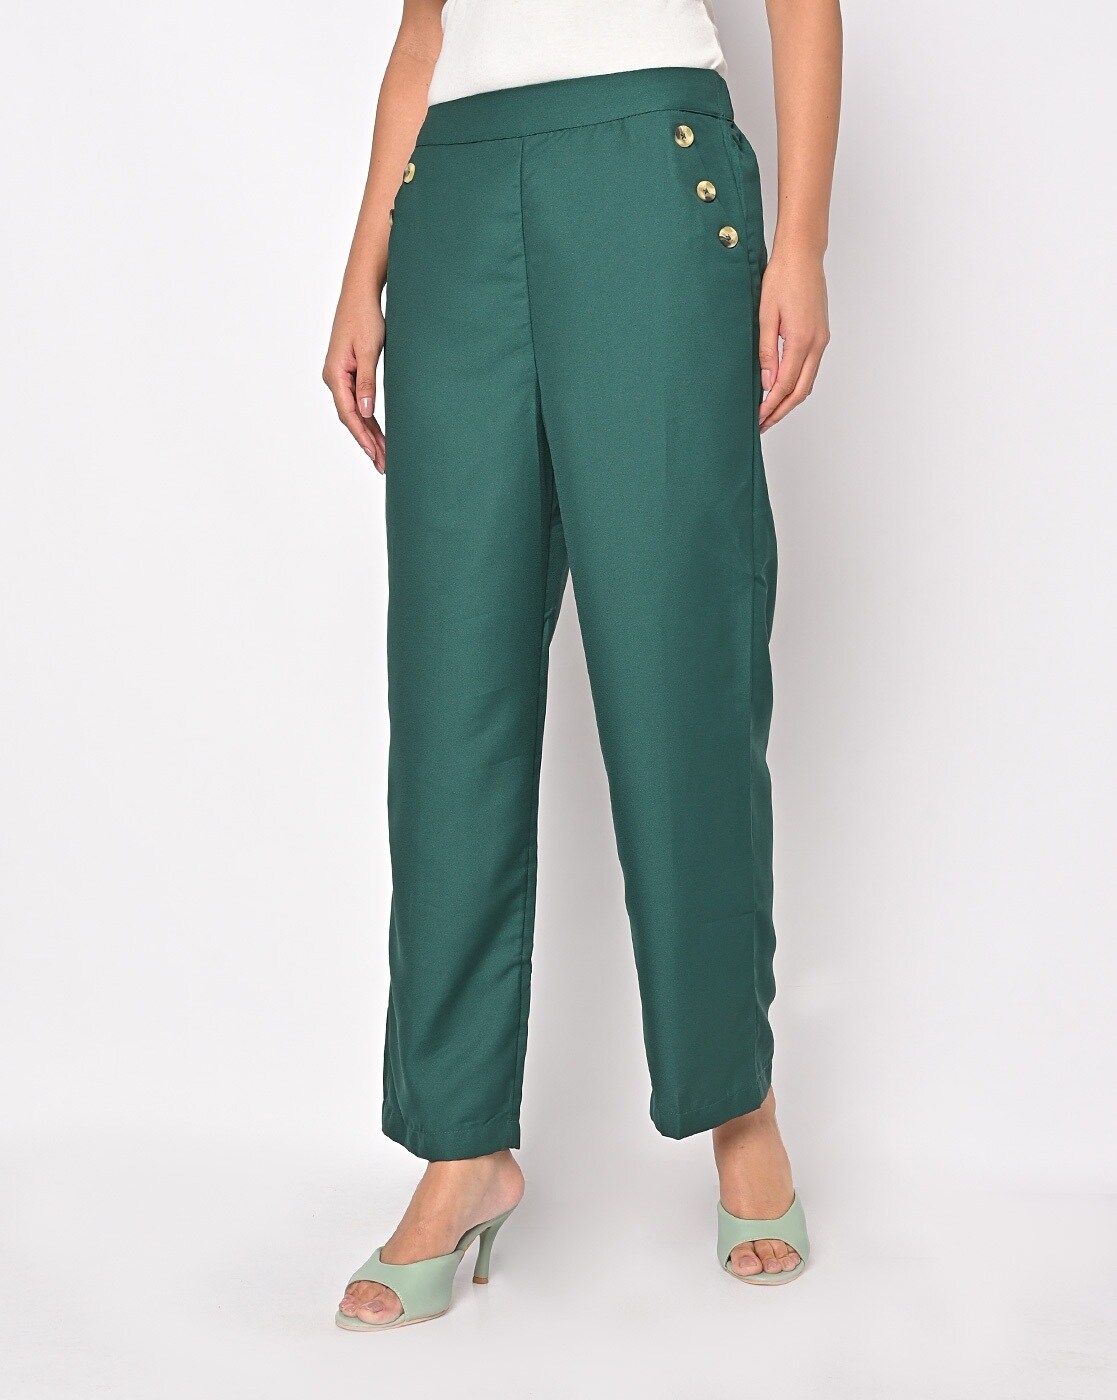 Dark Green Linen Joey Pants | Green trousers outfit, Green pants outfit,  Linen pants outfit